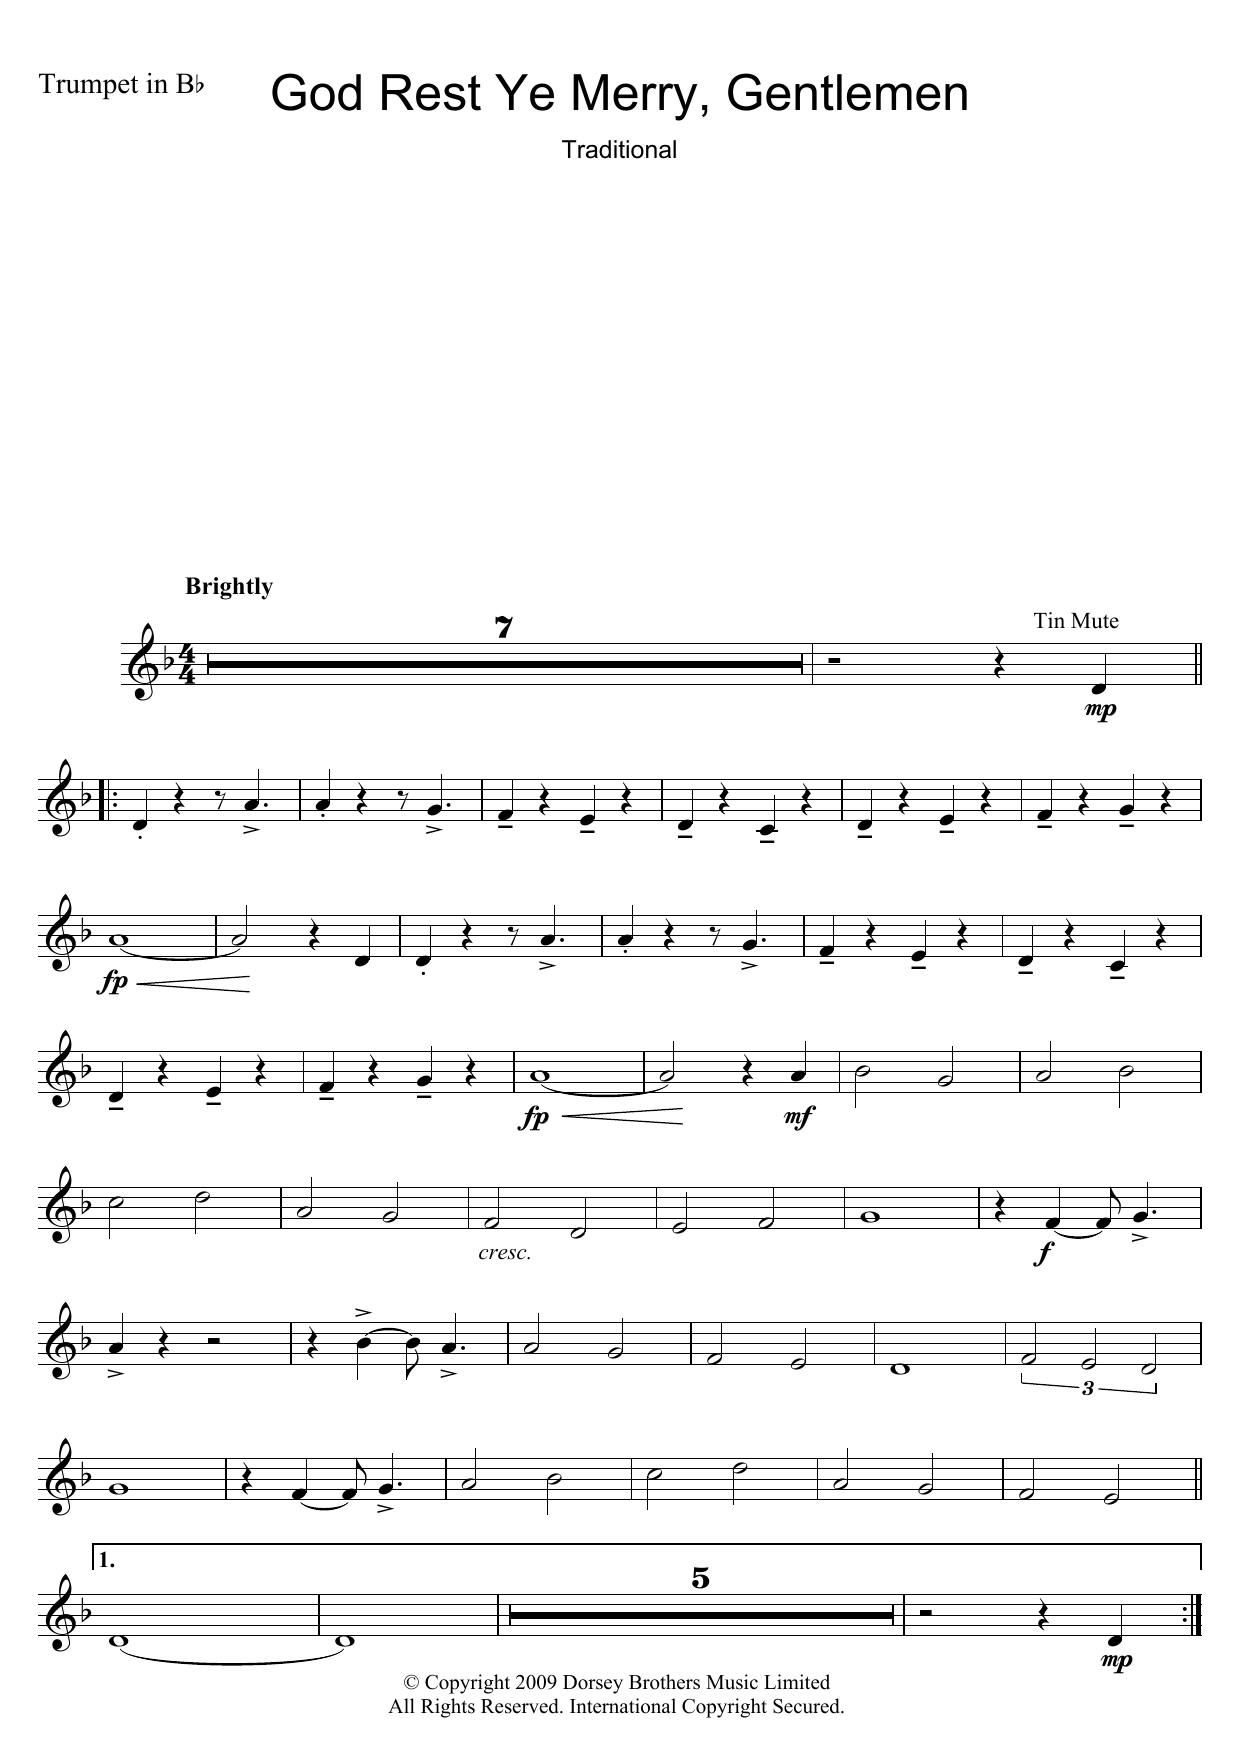 Traditional Carol God Rest Ye Merry, Gentlemen Sheet Music Notes & Chords for Ukulele - Download or Print PDF